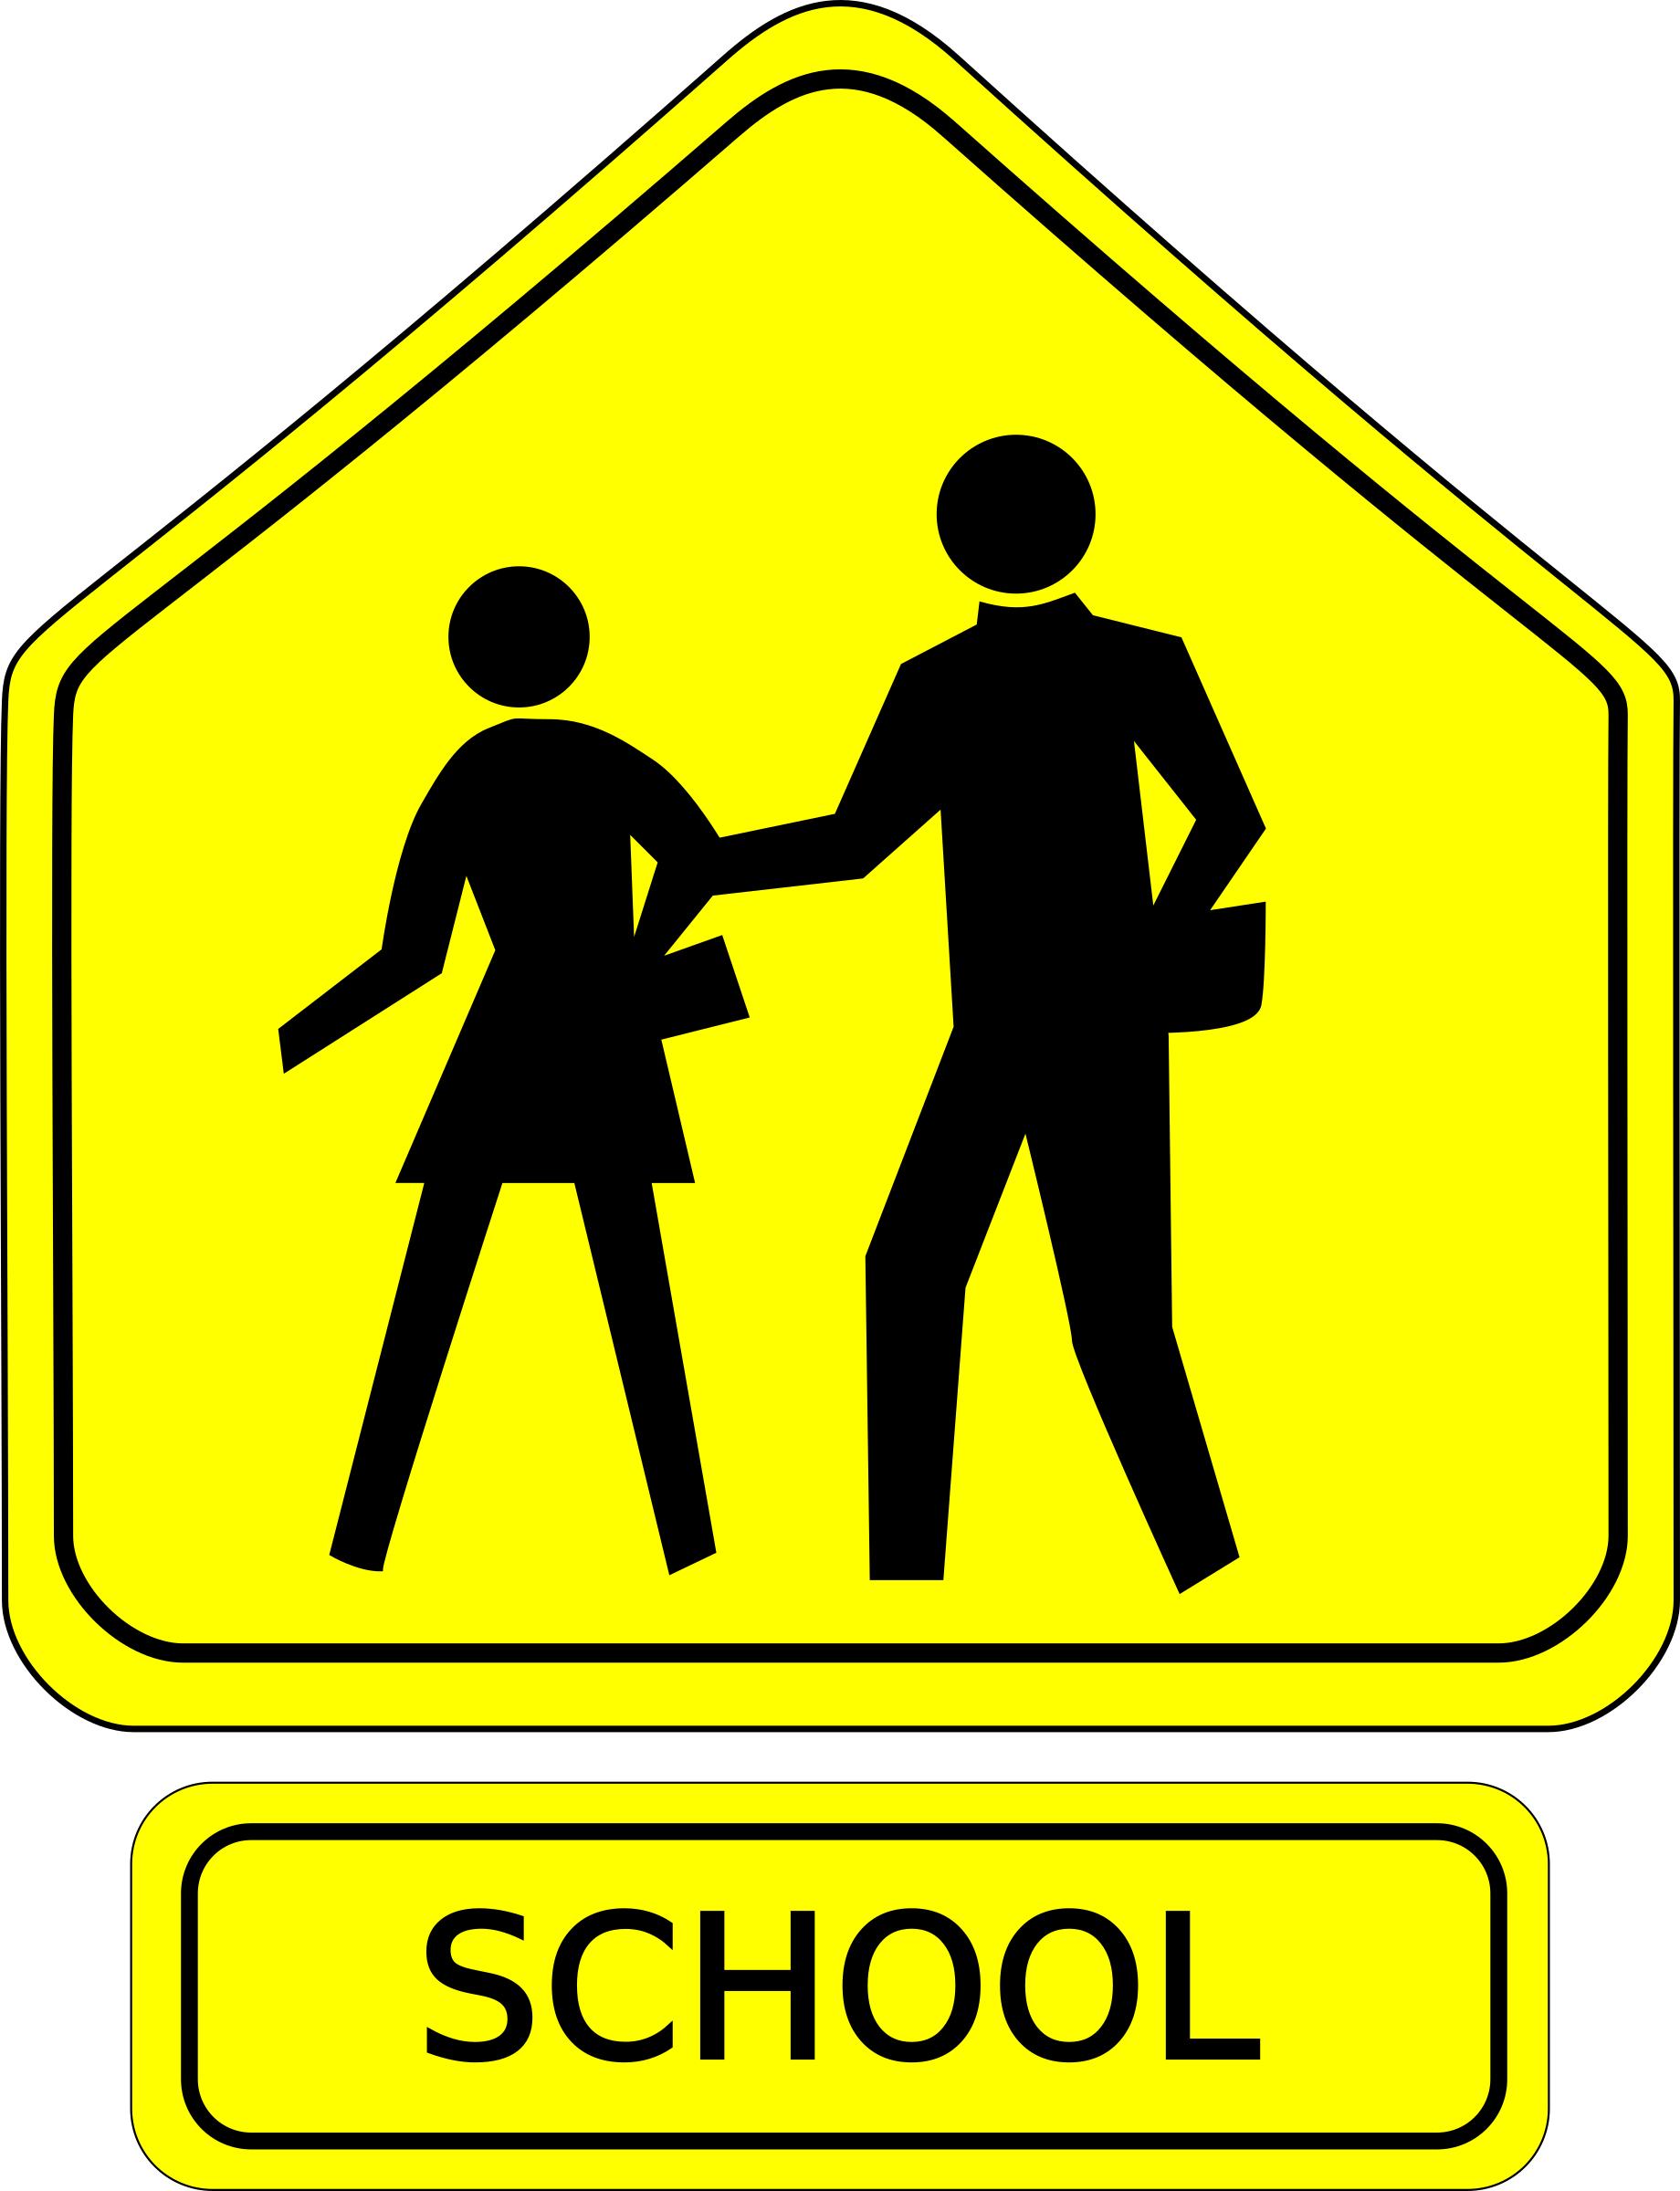 School Crossing Caution png